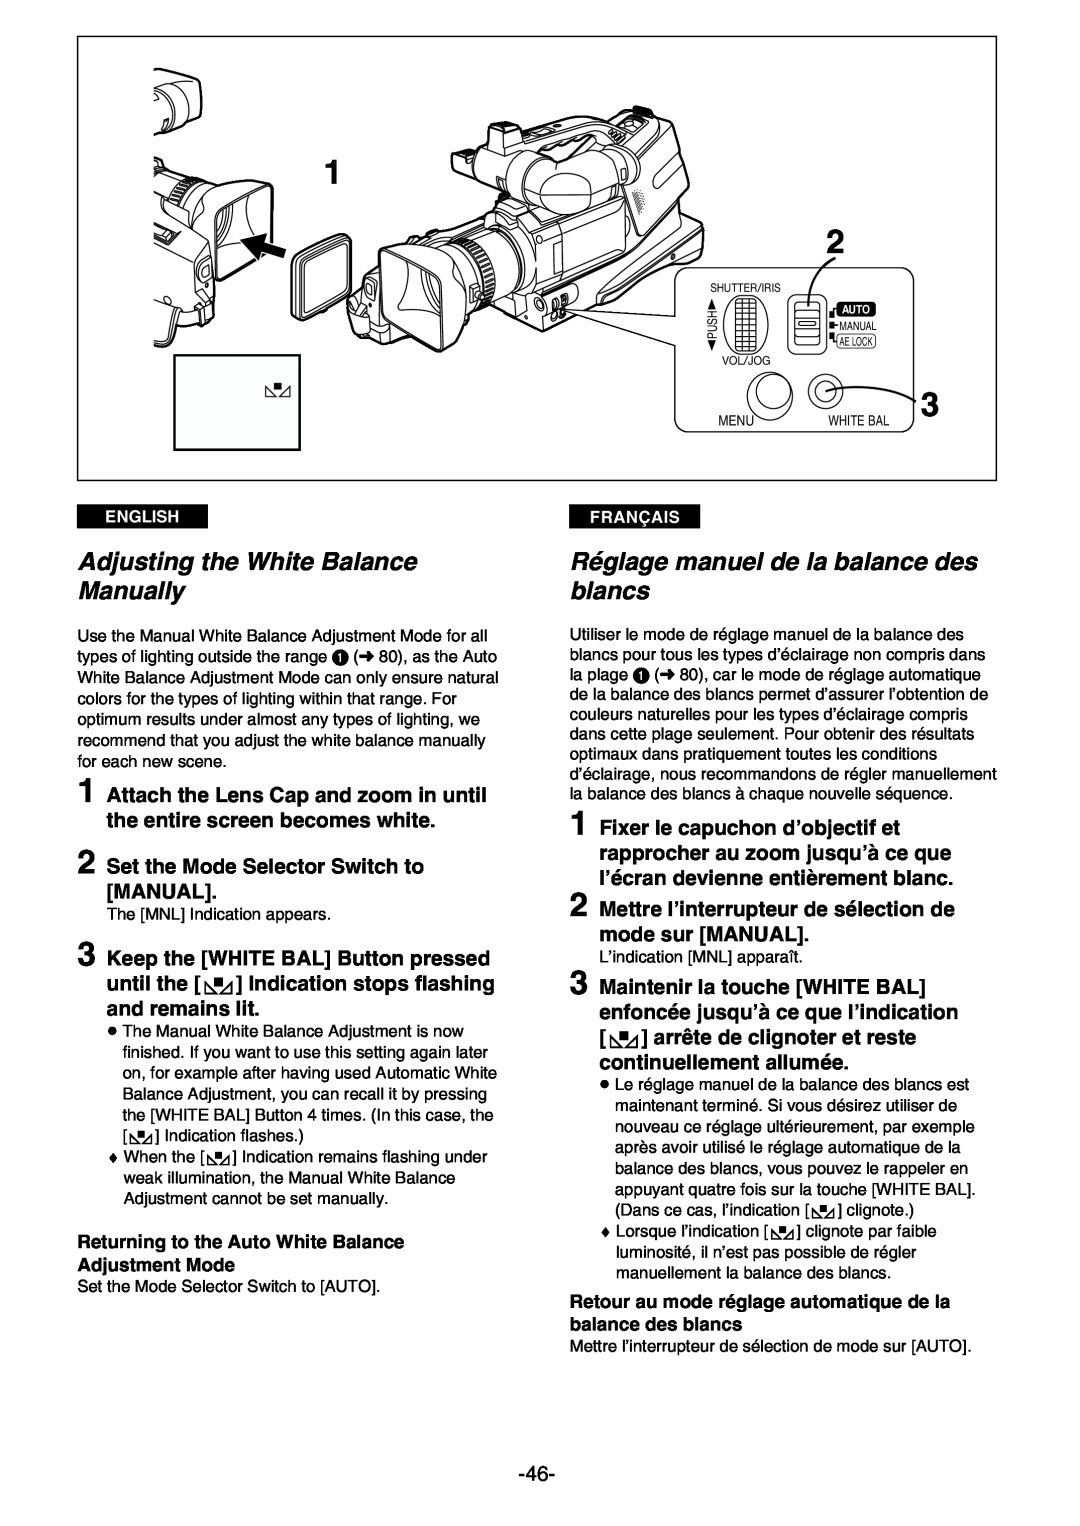 Panasonic AG- DVC 15P manual Adjusting the White Balance Manually, Réglage manuel de la balance des blancs, and remains lit 